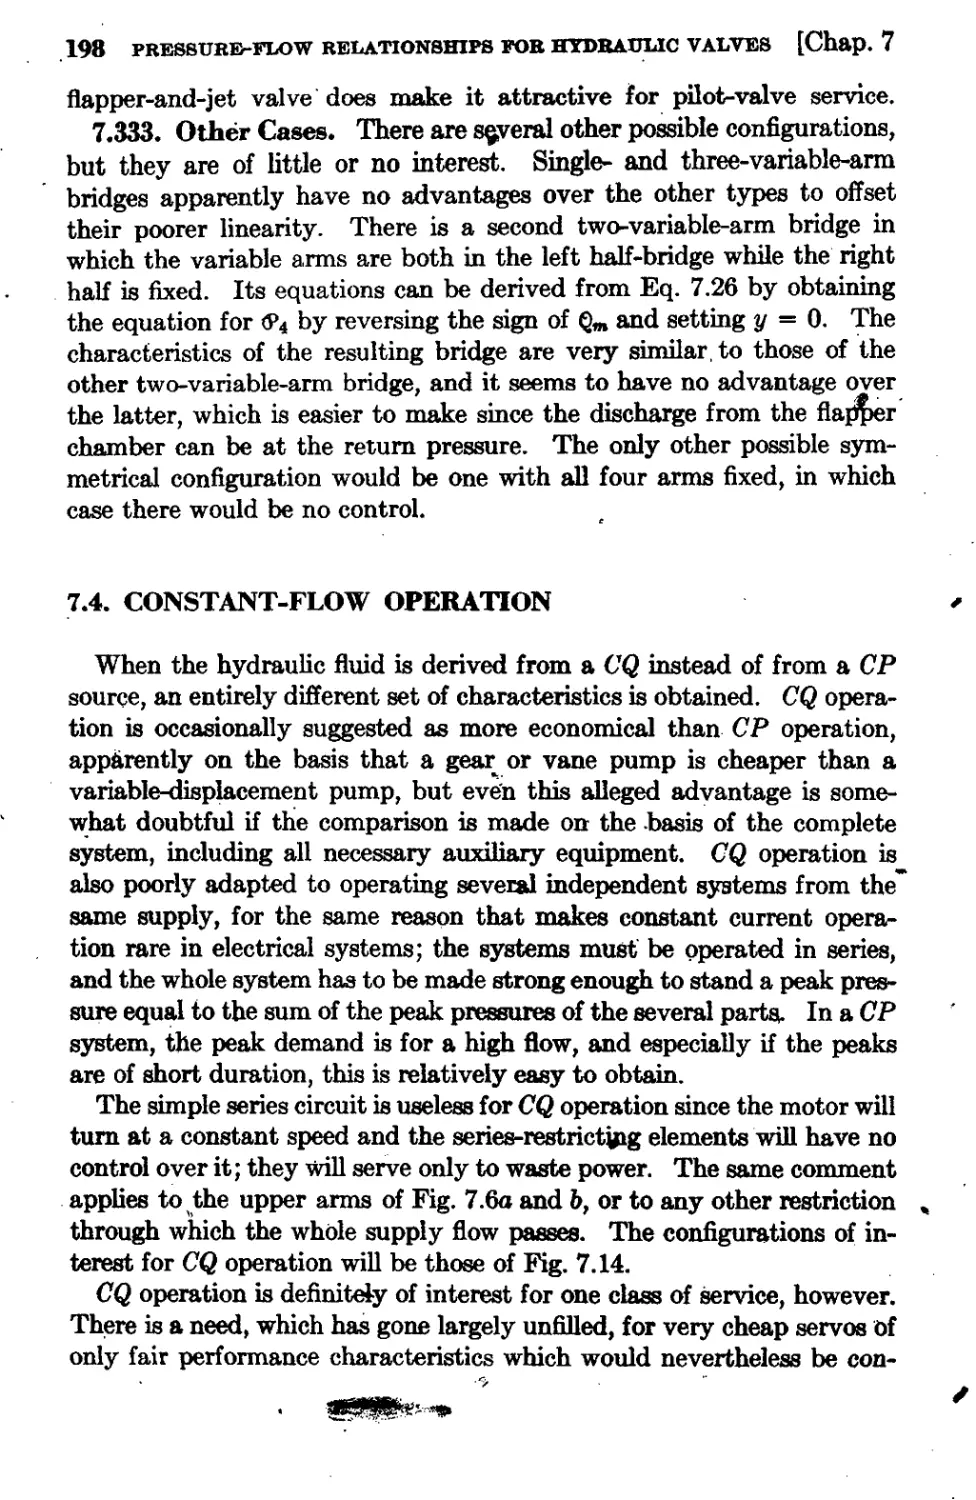 7.4 Constant-Flow Operation